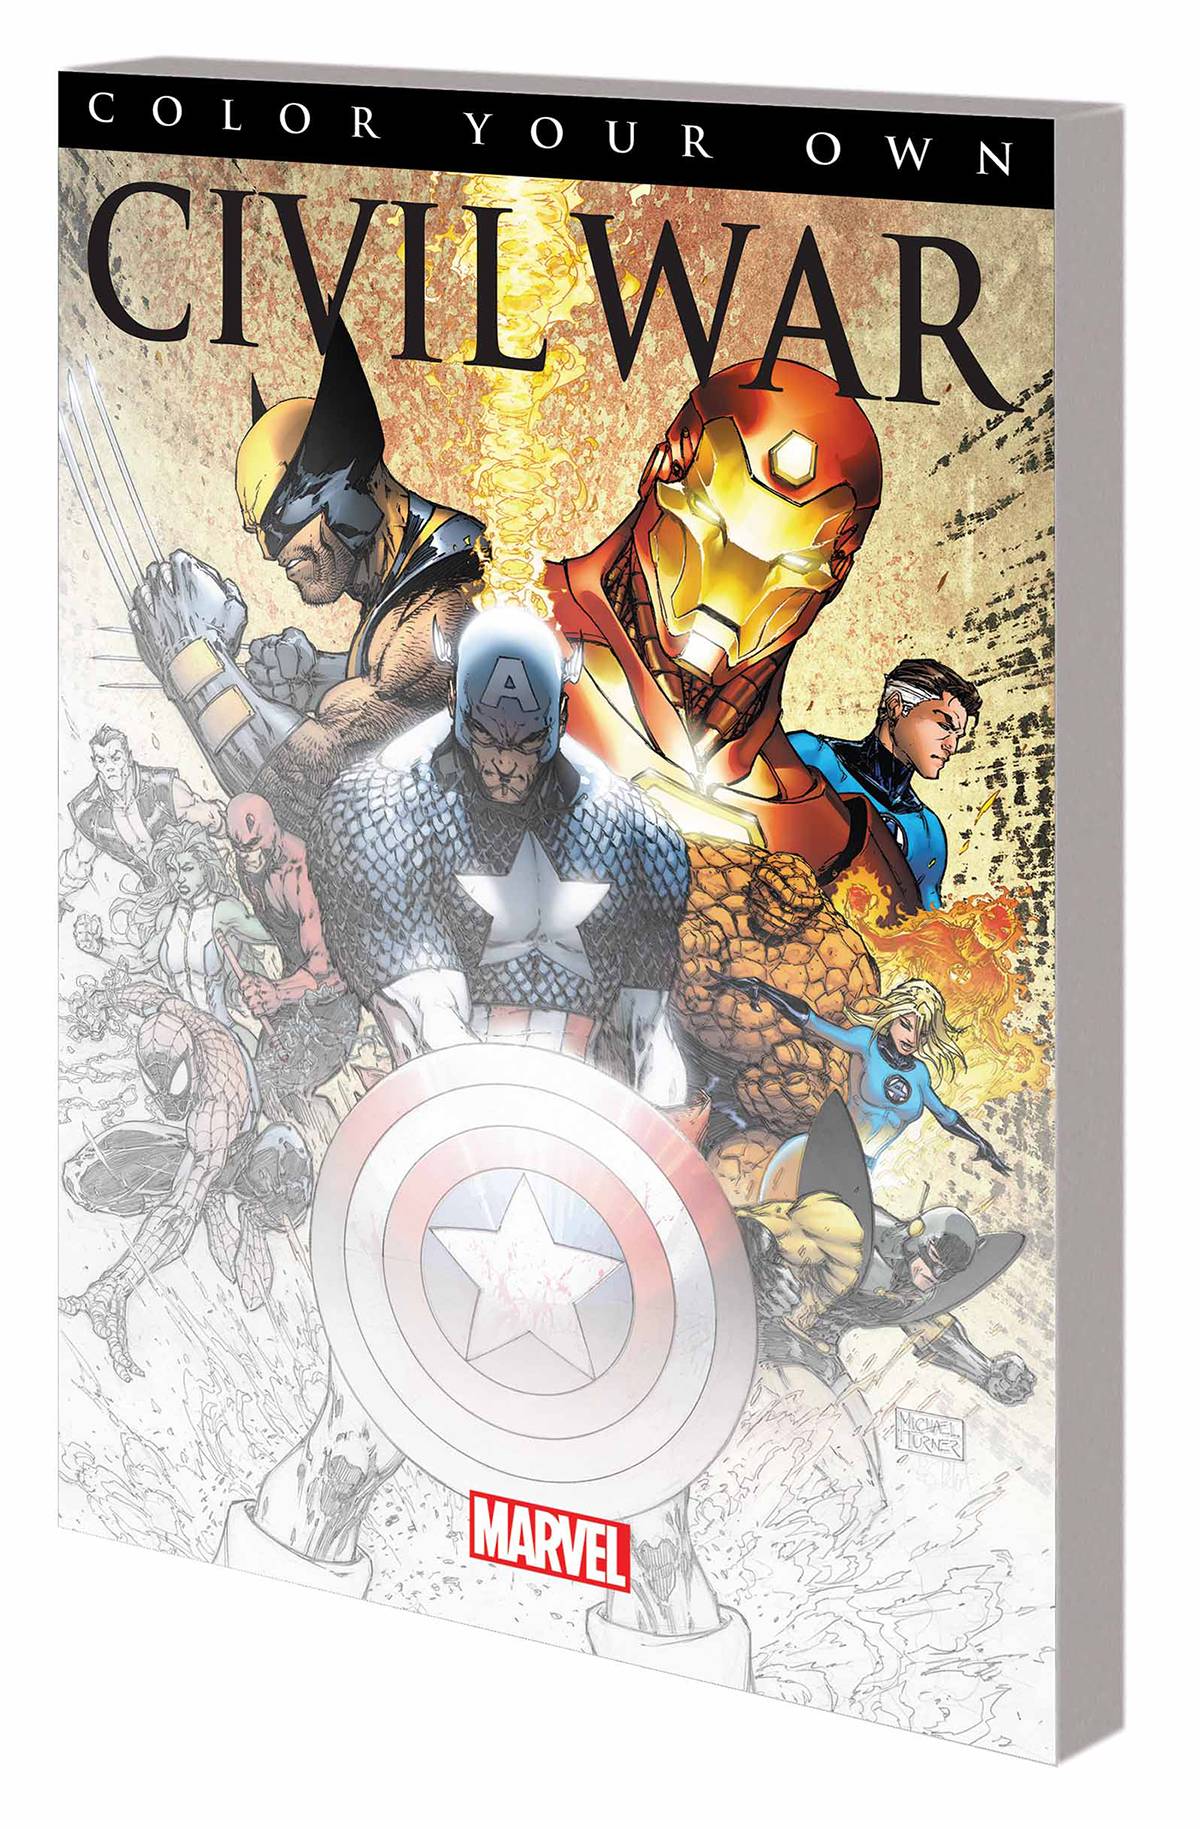 Color Your Own Civil War Graphic Novel